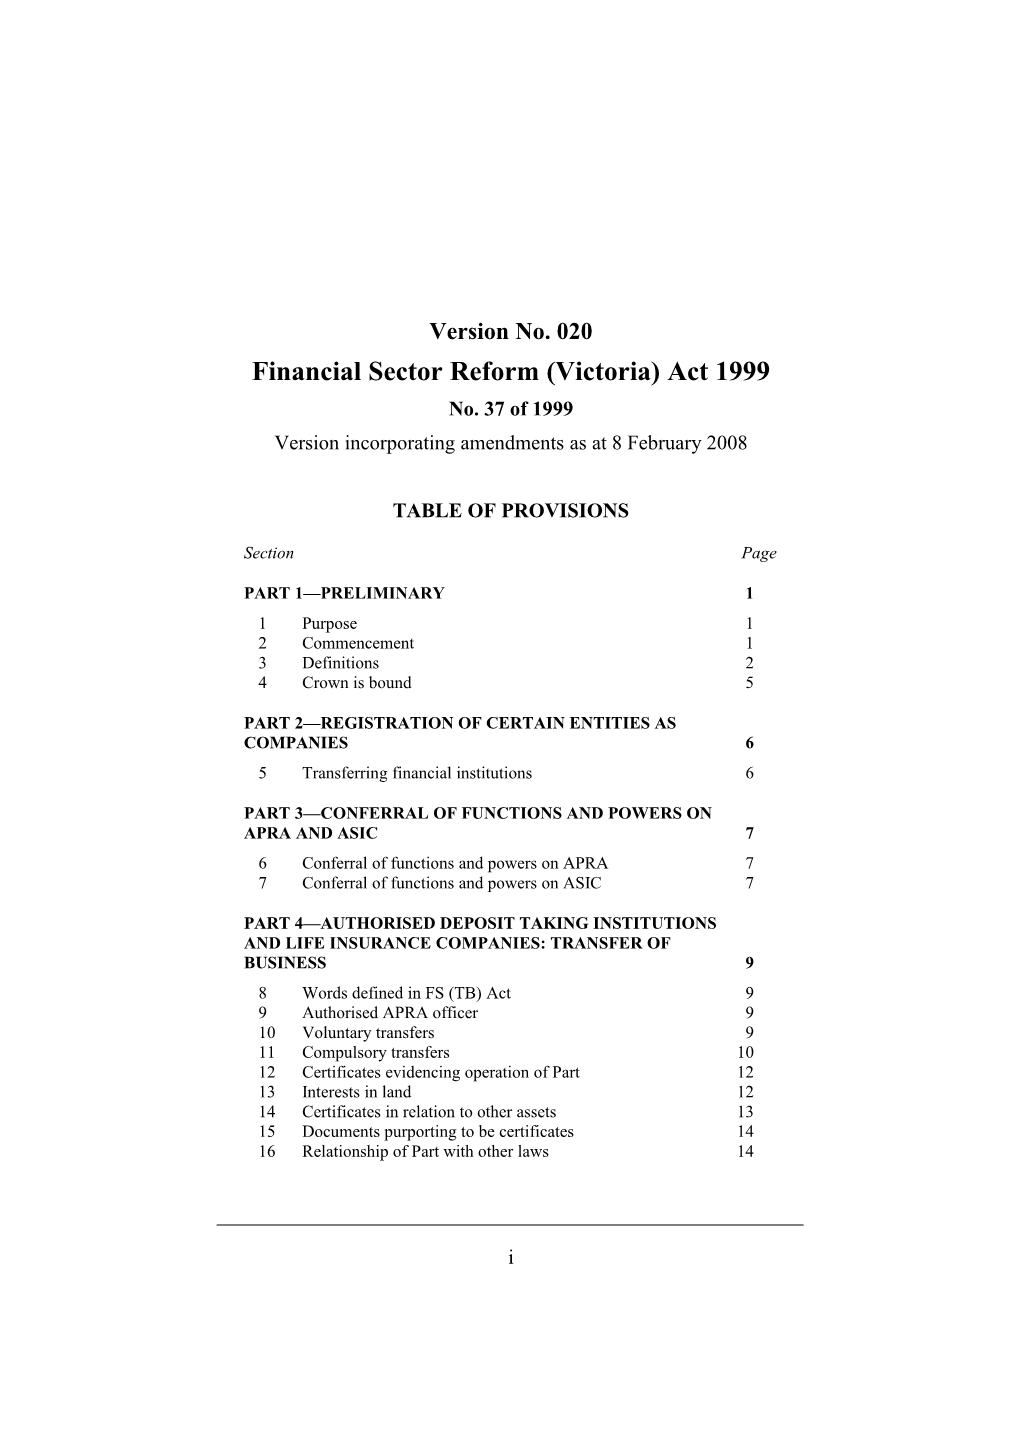 Financial Sector Reform (Victoria) Act 1999